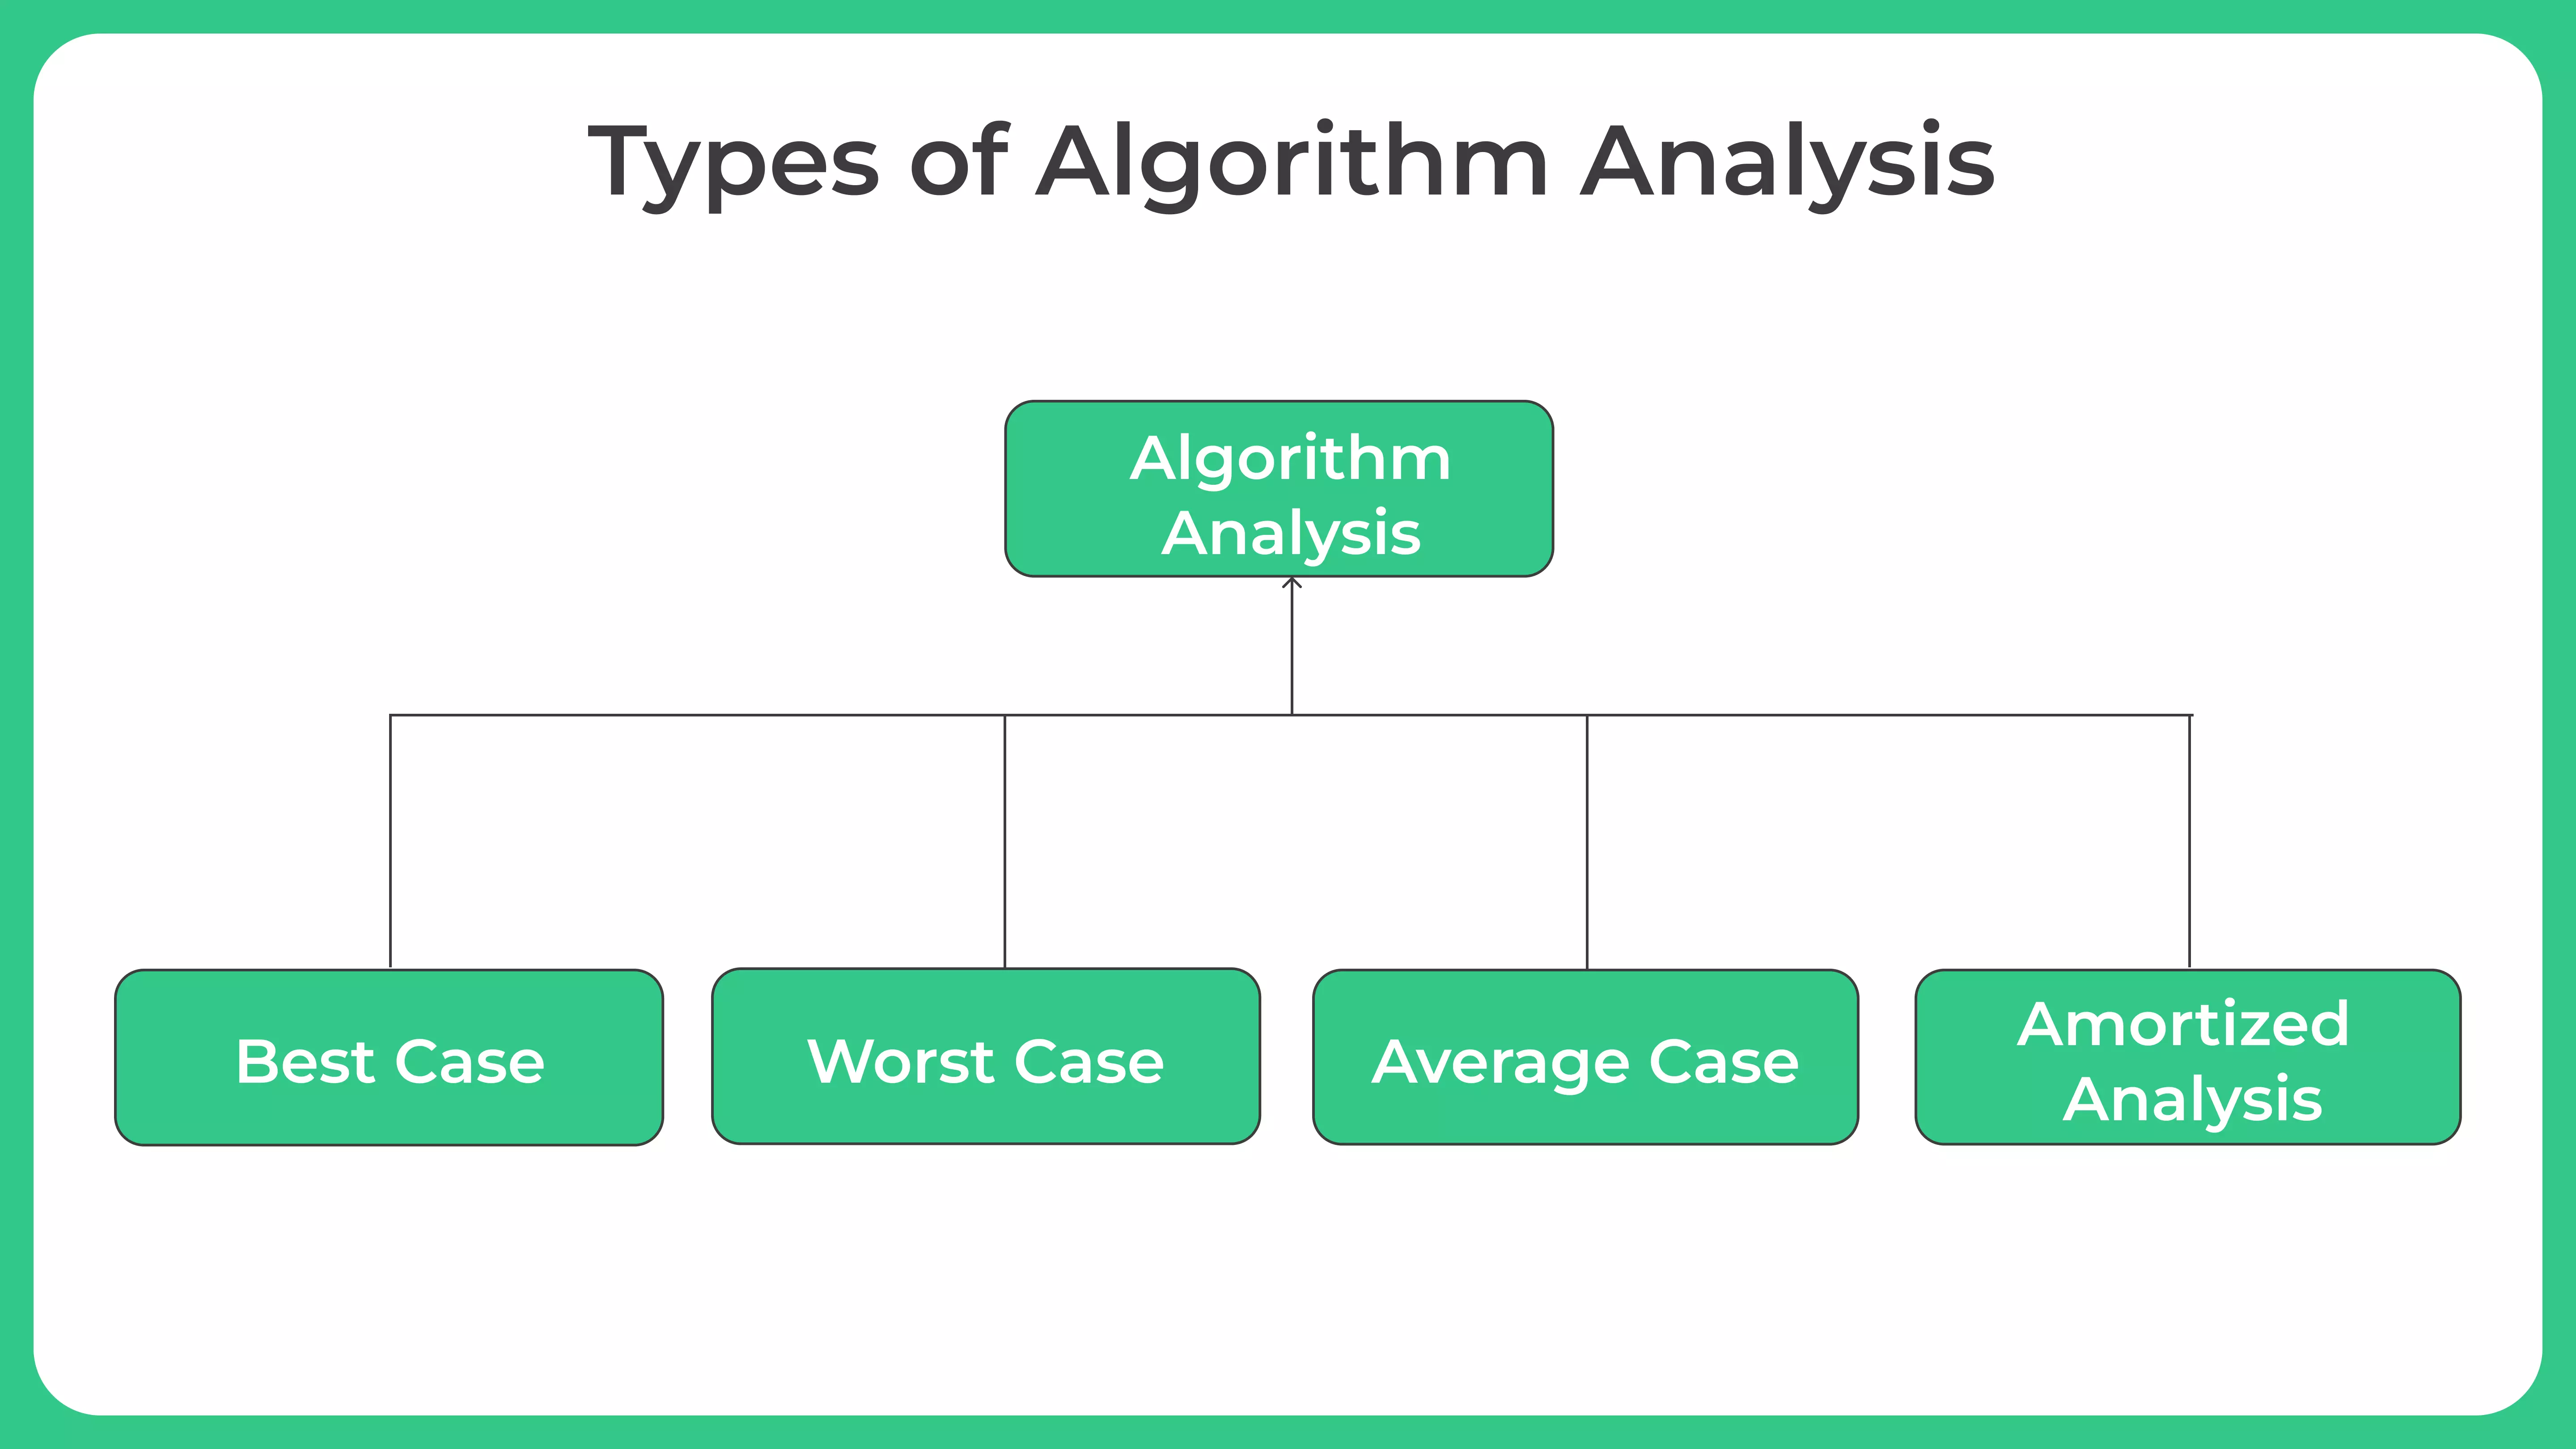 Types of Analysis of Algorithm